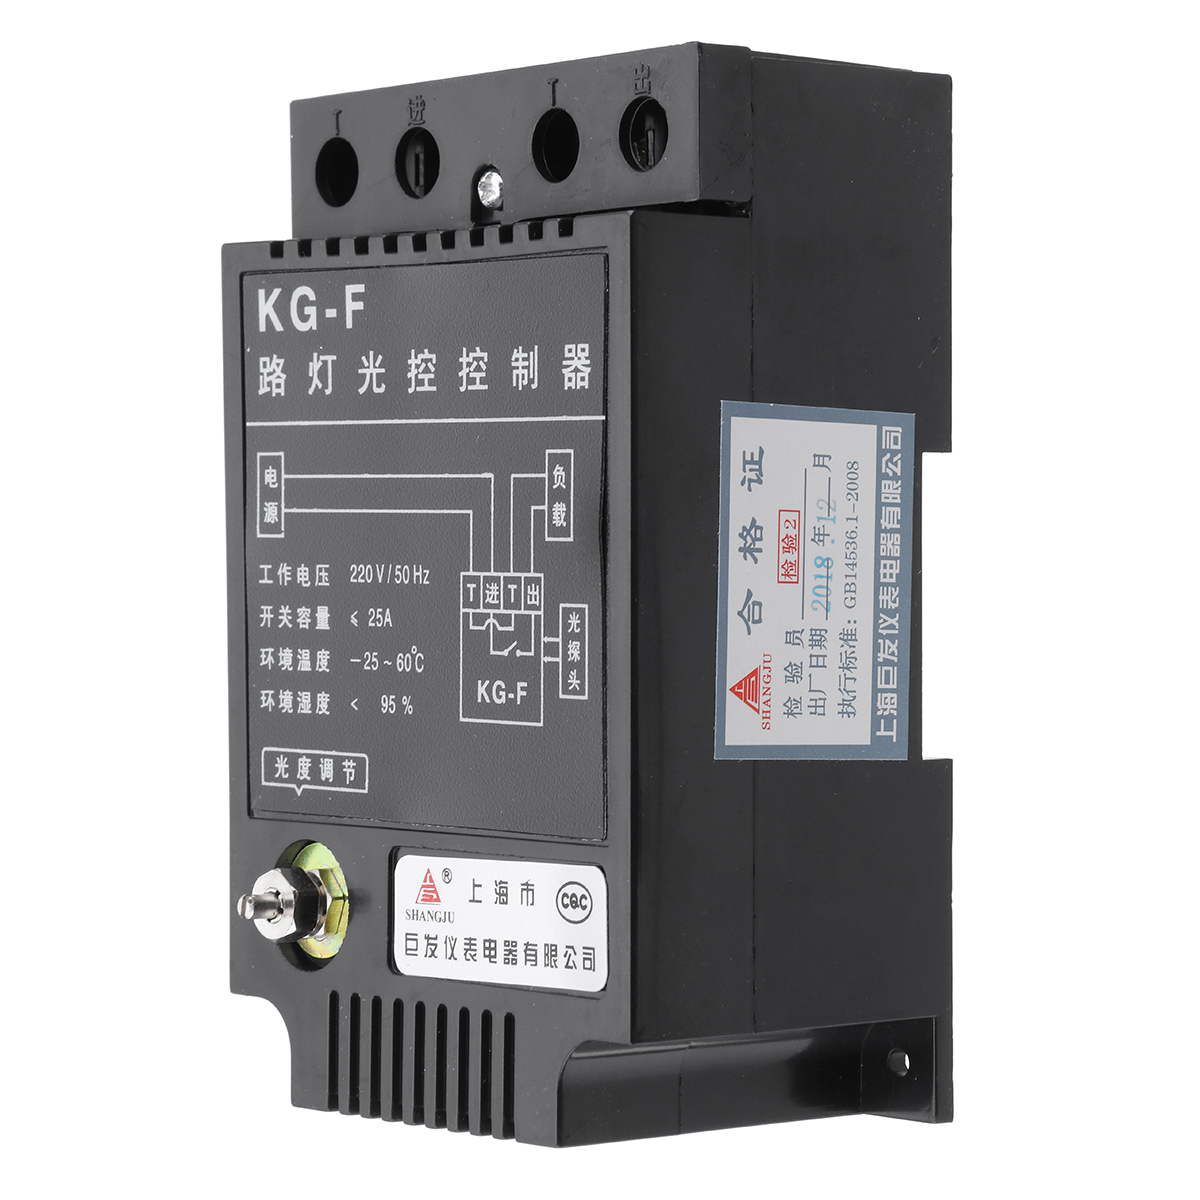 KG-F-220V-Light-Control-Switch-Automatic-Corridor-Light-Sensor-Adjustable-Intelligent-Street-Lamp-Co-1420007-2